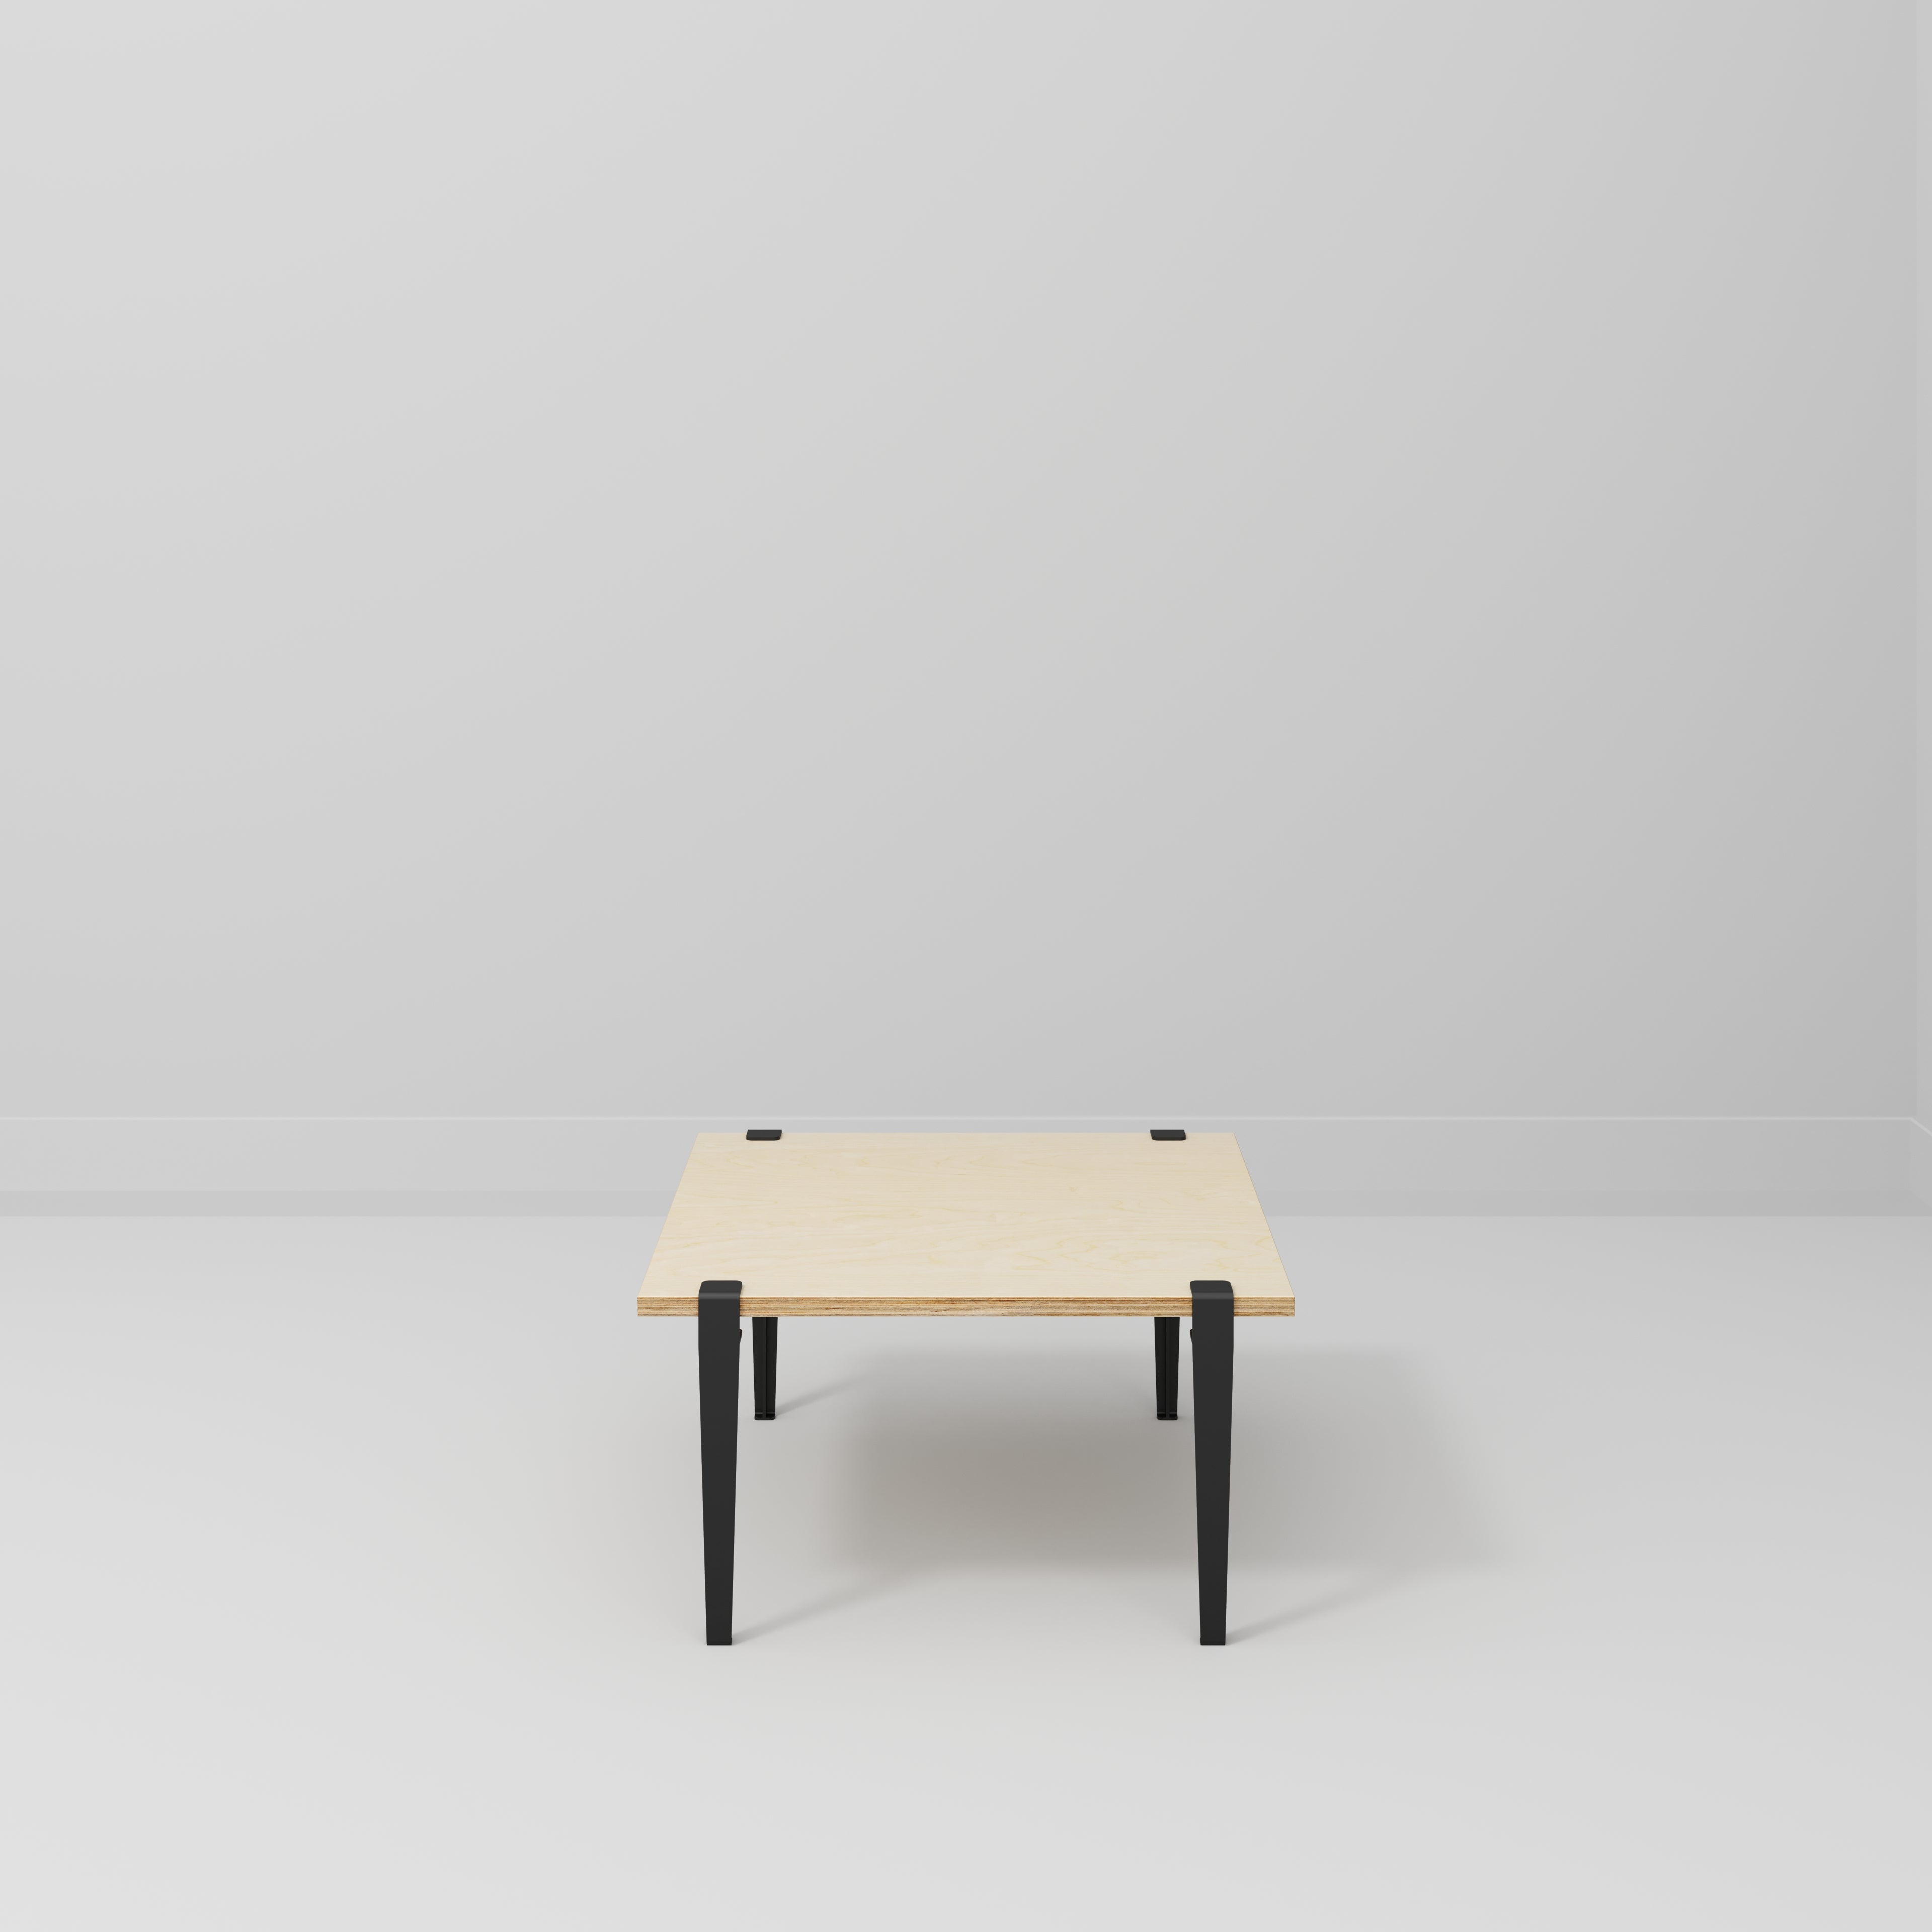 Custom Plywood Coffee Table with Tiptoe Legs